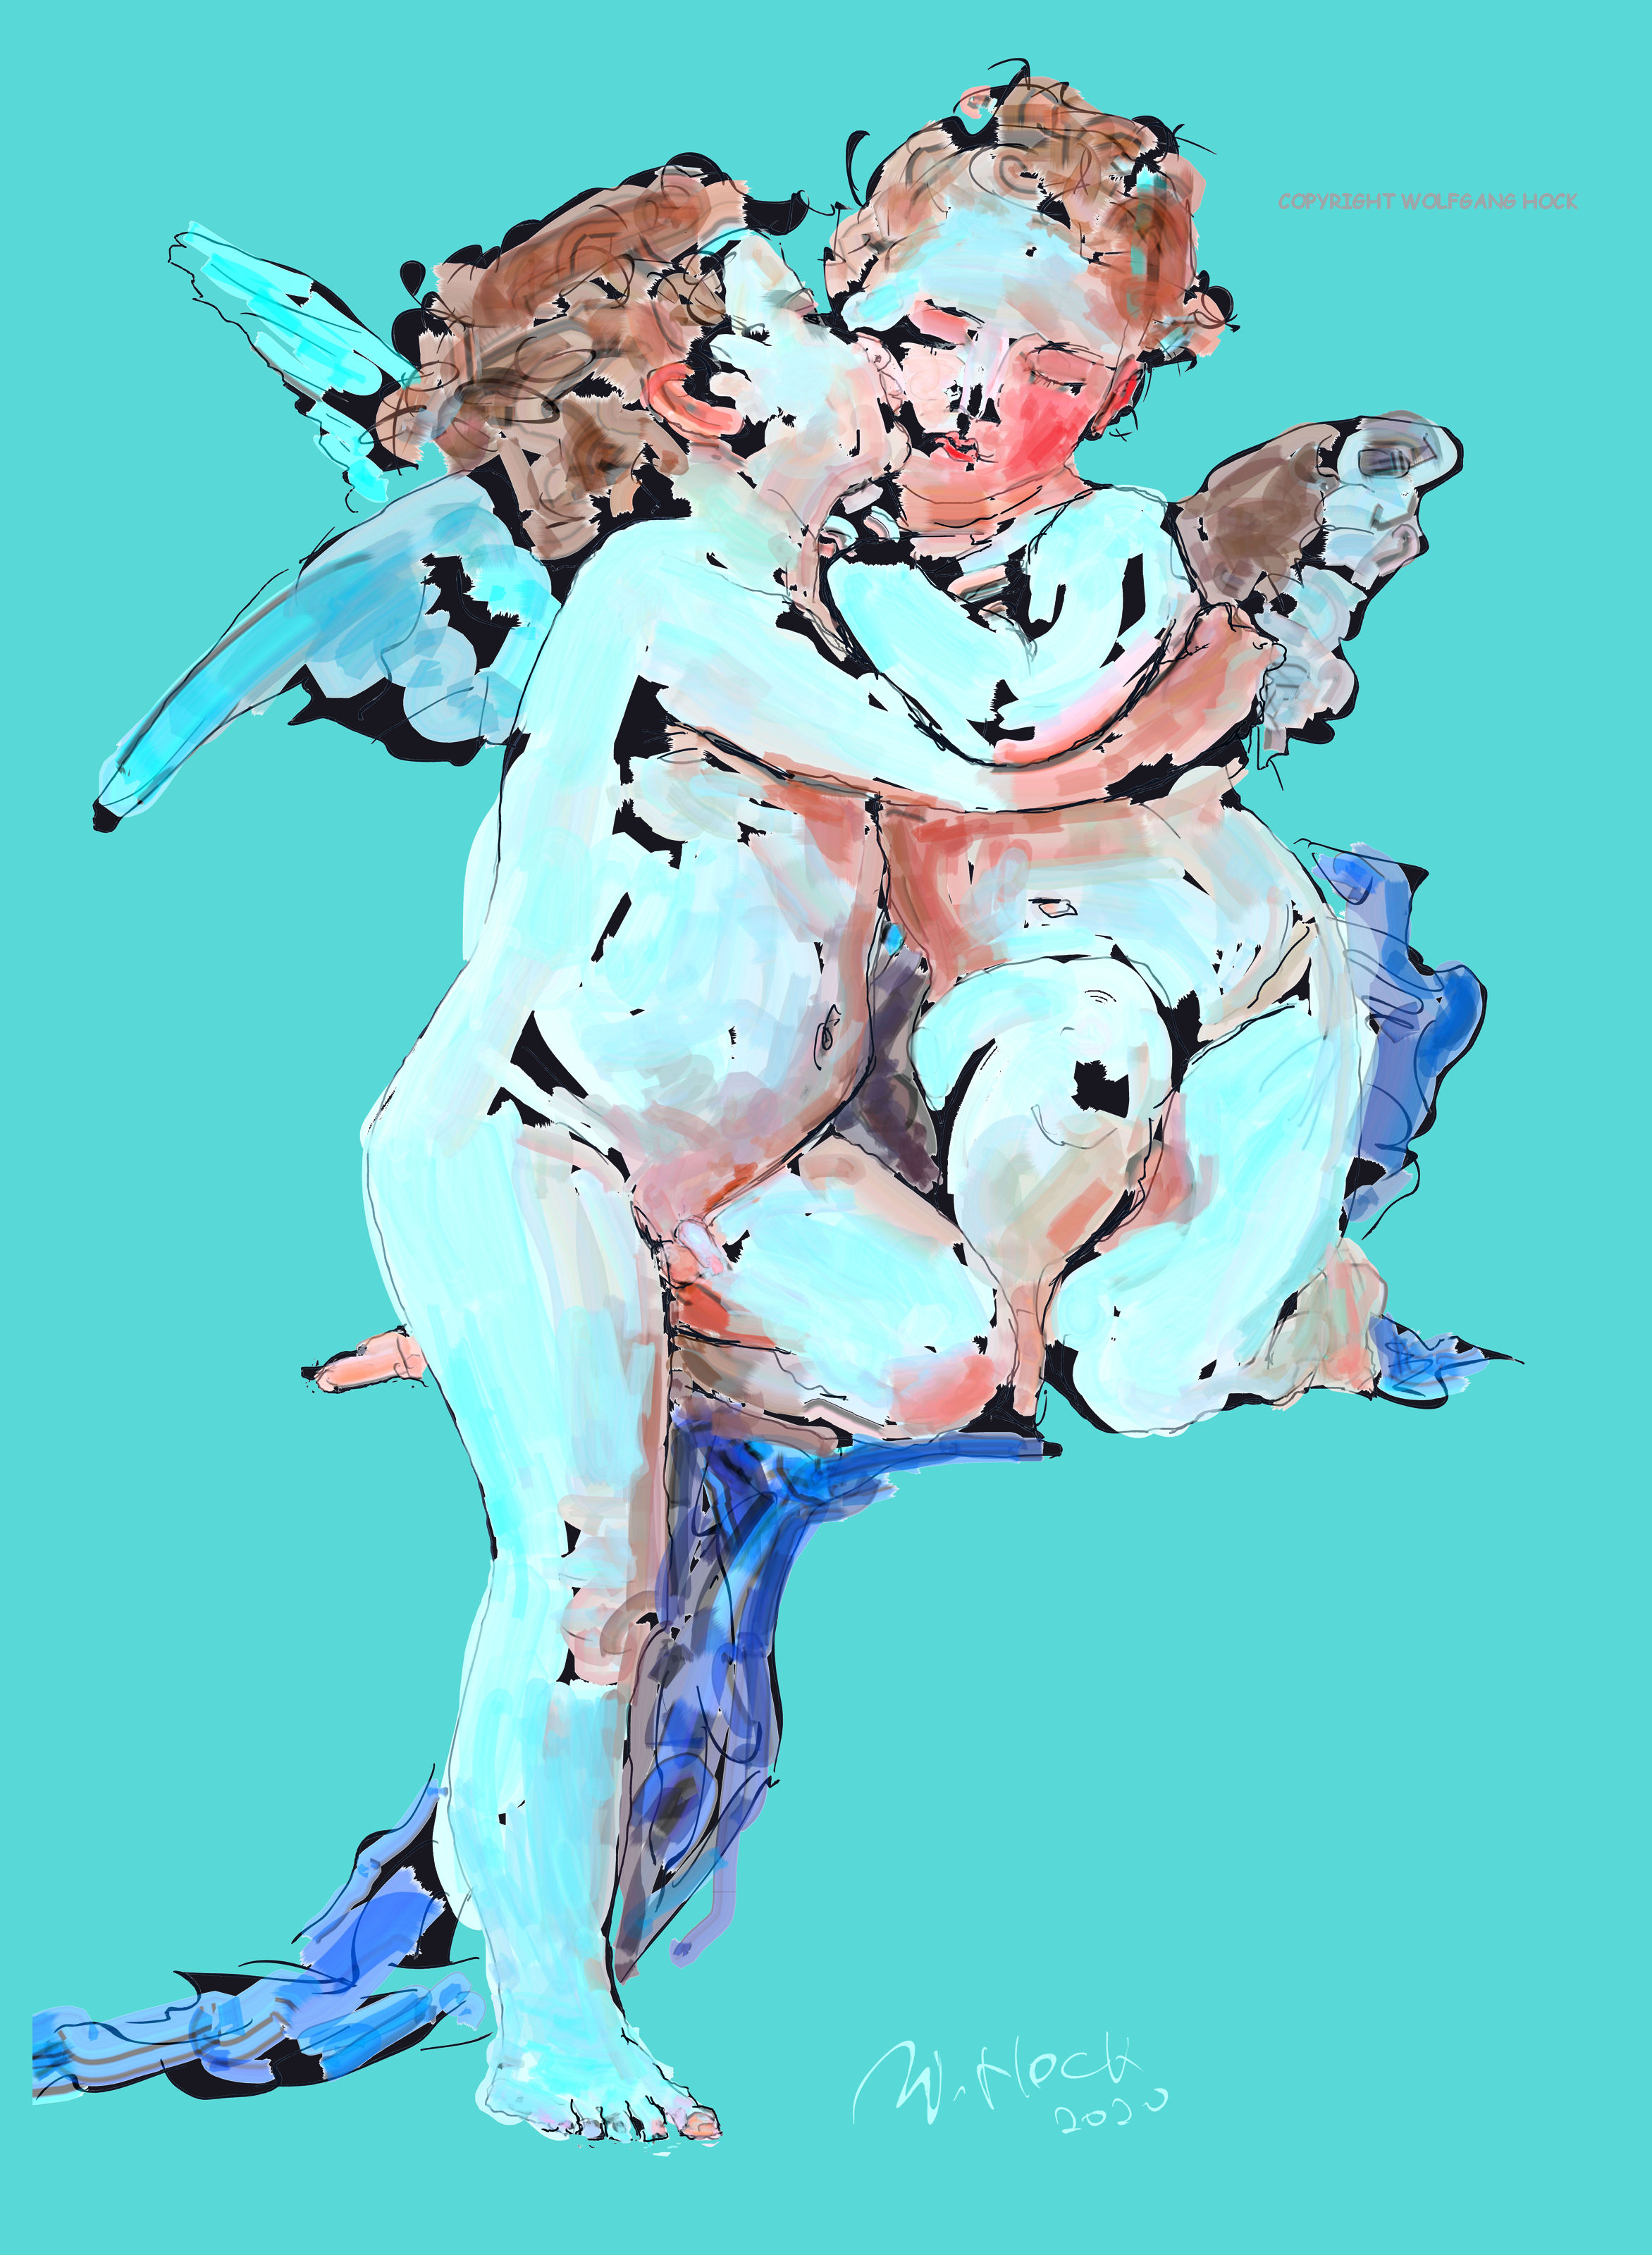 Der Kuss II - The kiss II - O beijo II 2020   Handmade digital painting with collage on canvas 120 x 170 cm (188 megapixels)